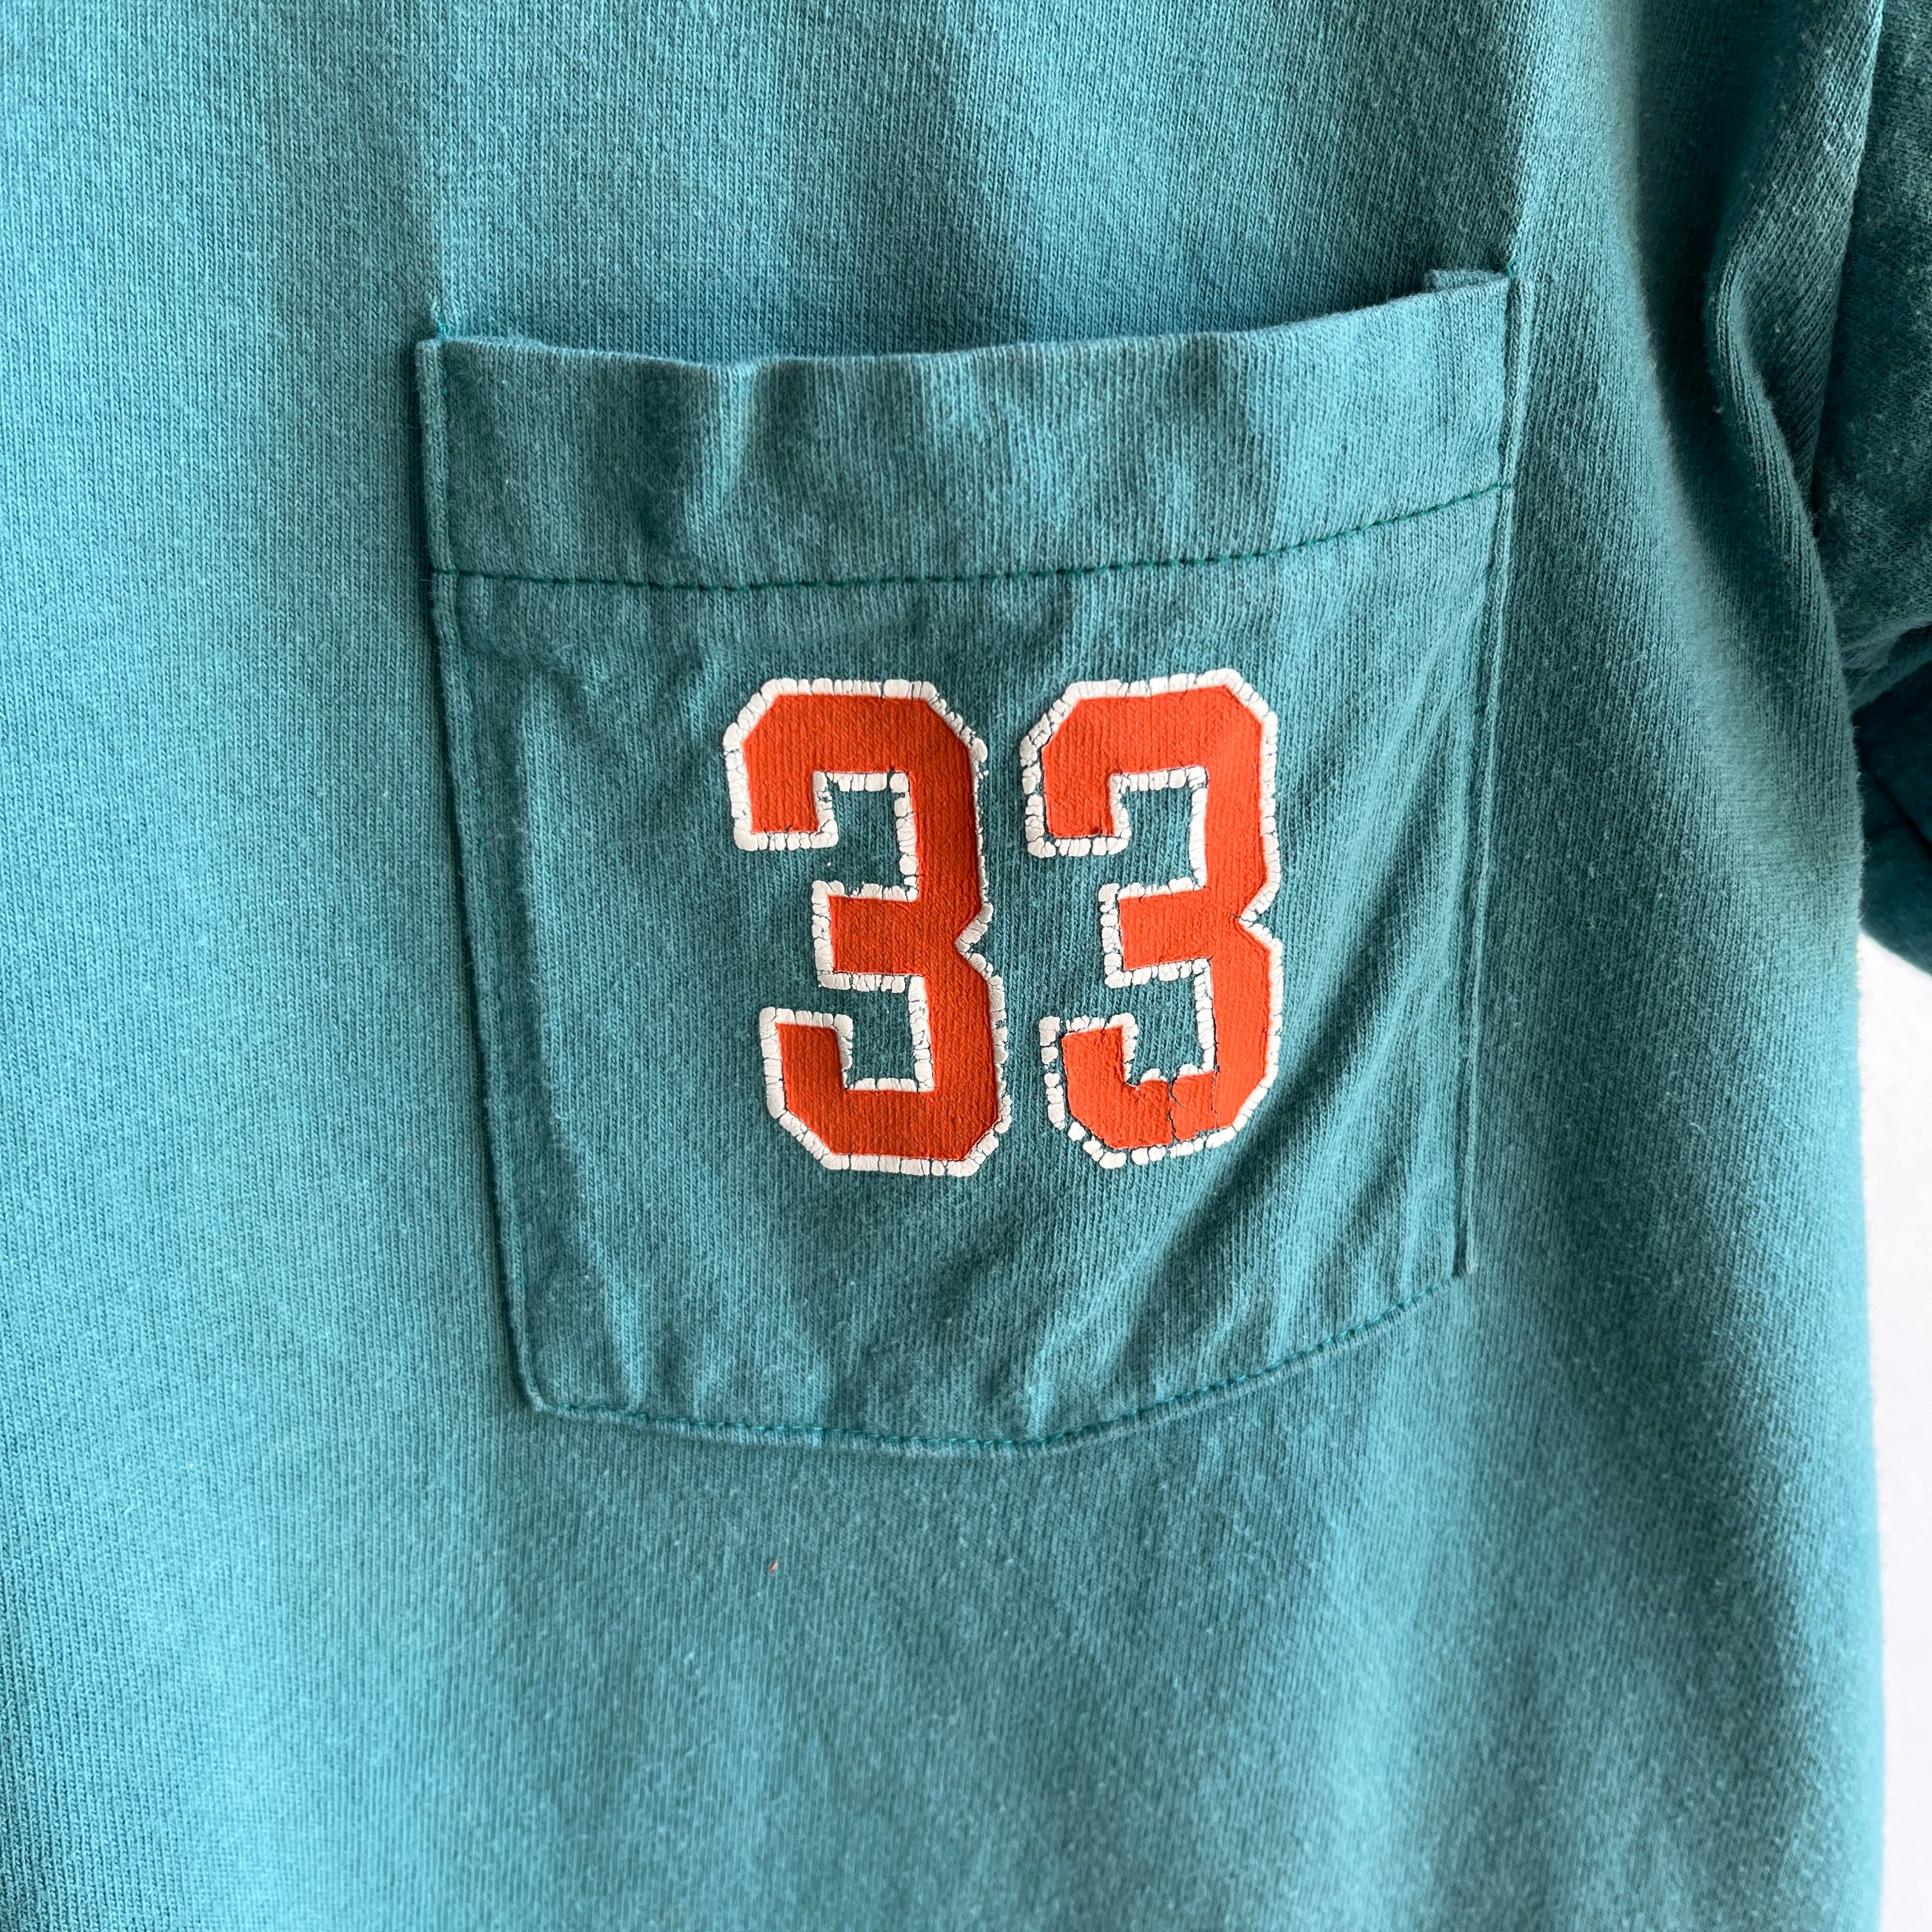 1980/90s No 33 Pocket T-Shirt - Miami Dolphins??